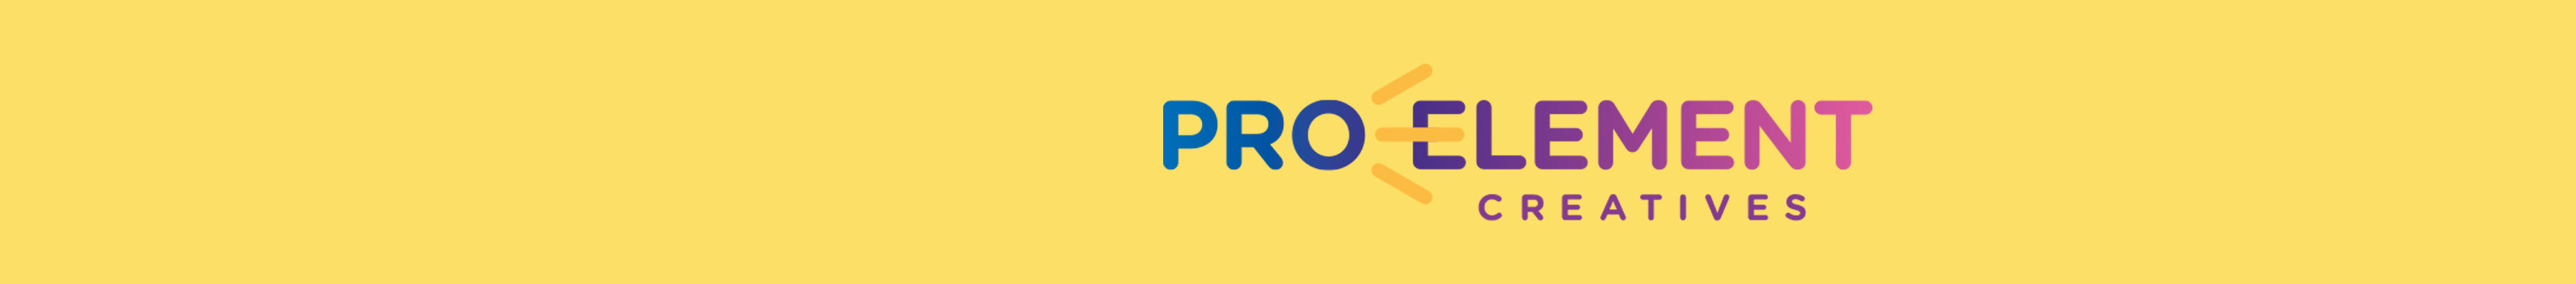 Pro Element Creatives's profile banner